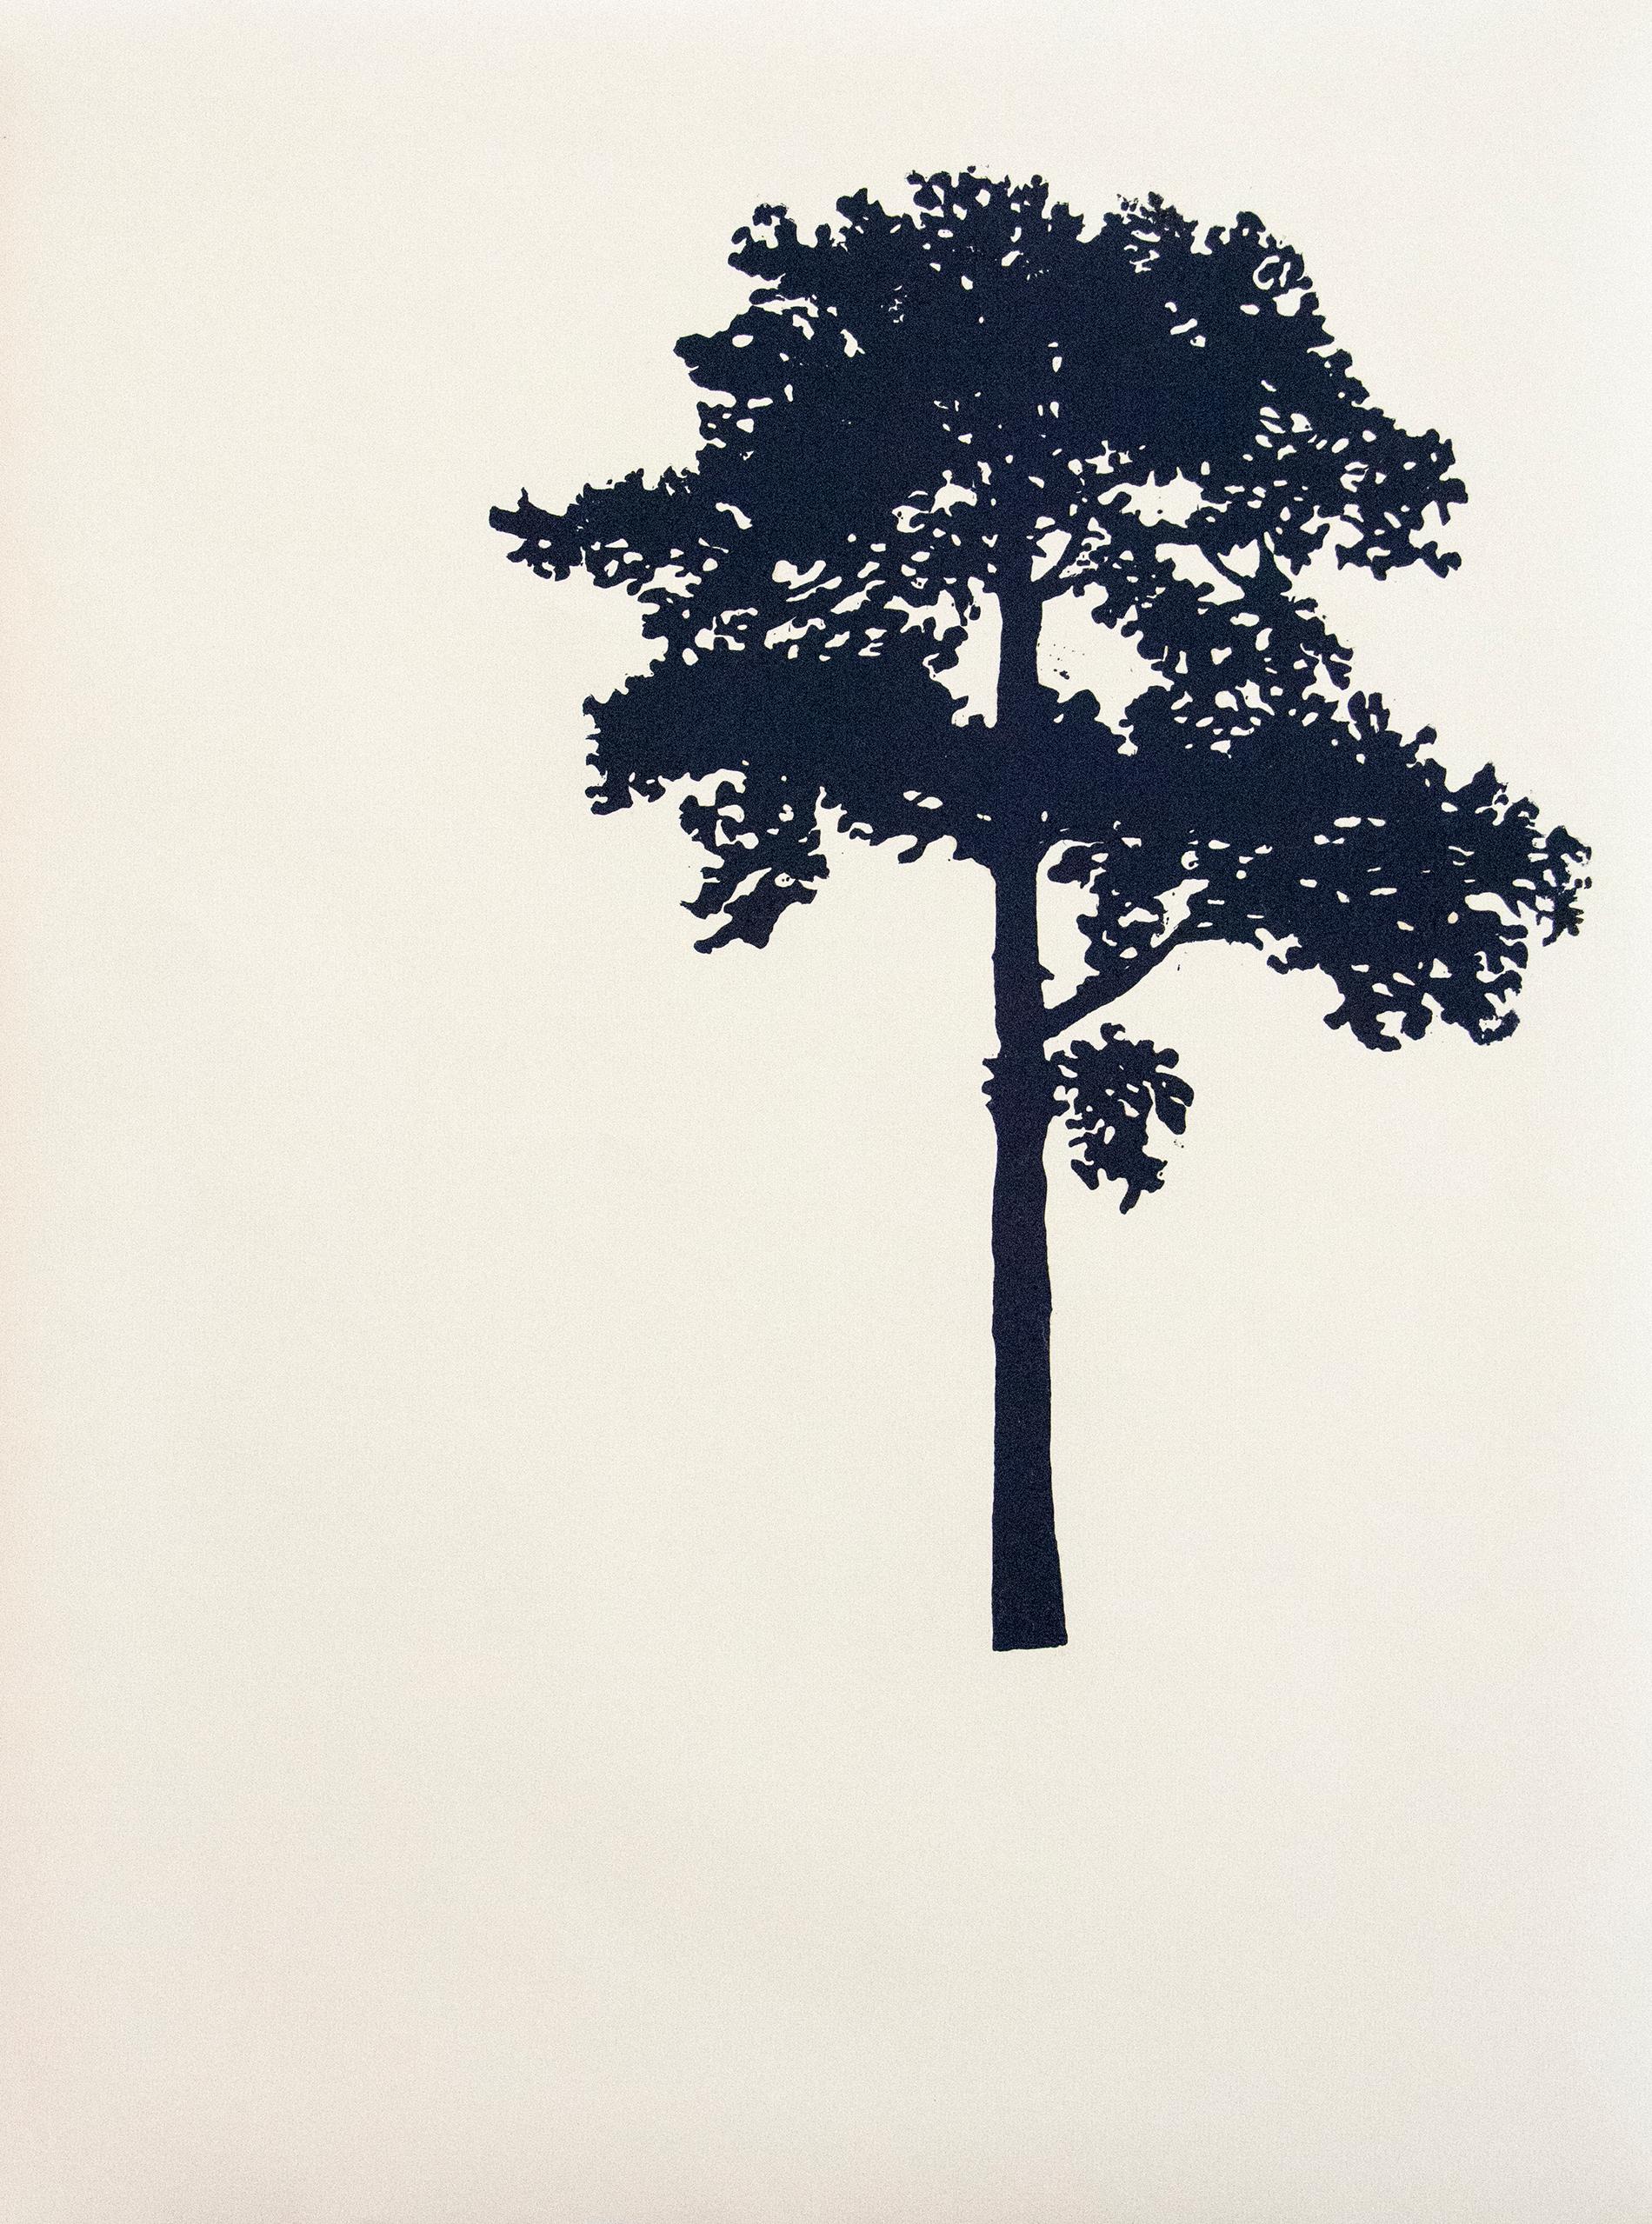 Der Wald  8/12 - portfolio of 9 woodblock prints 6